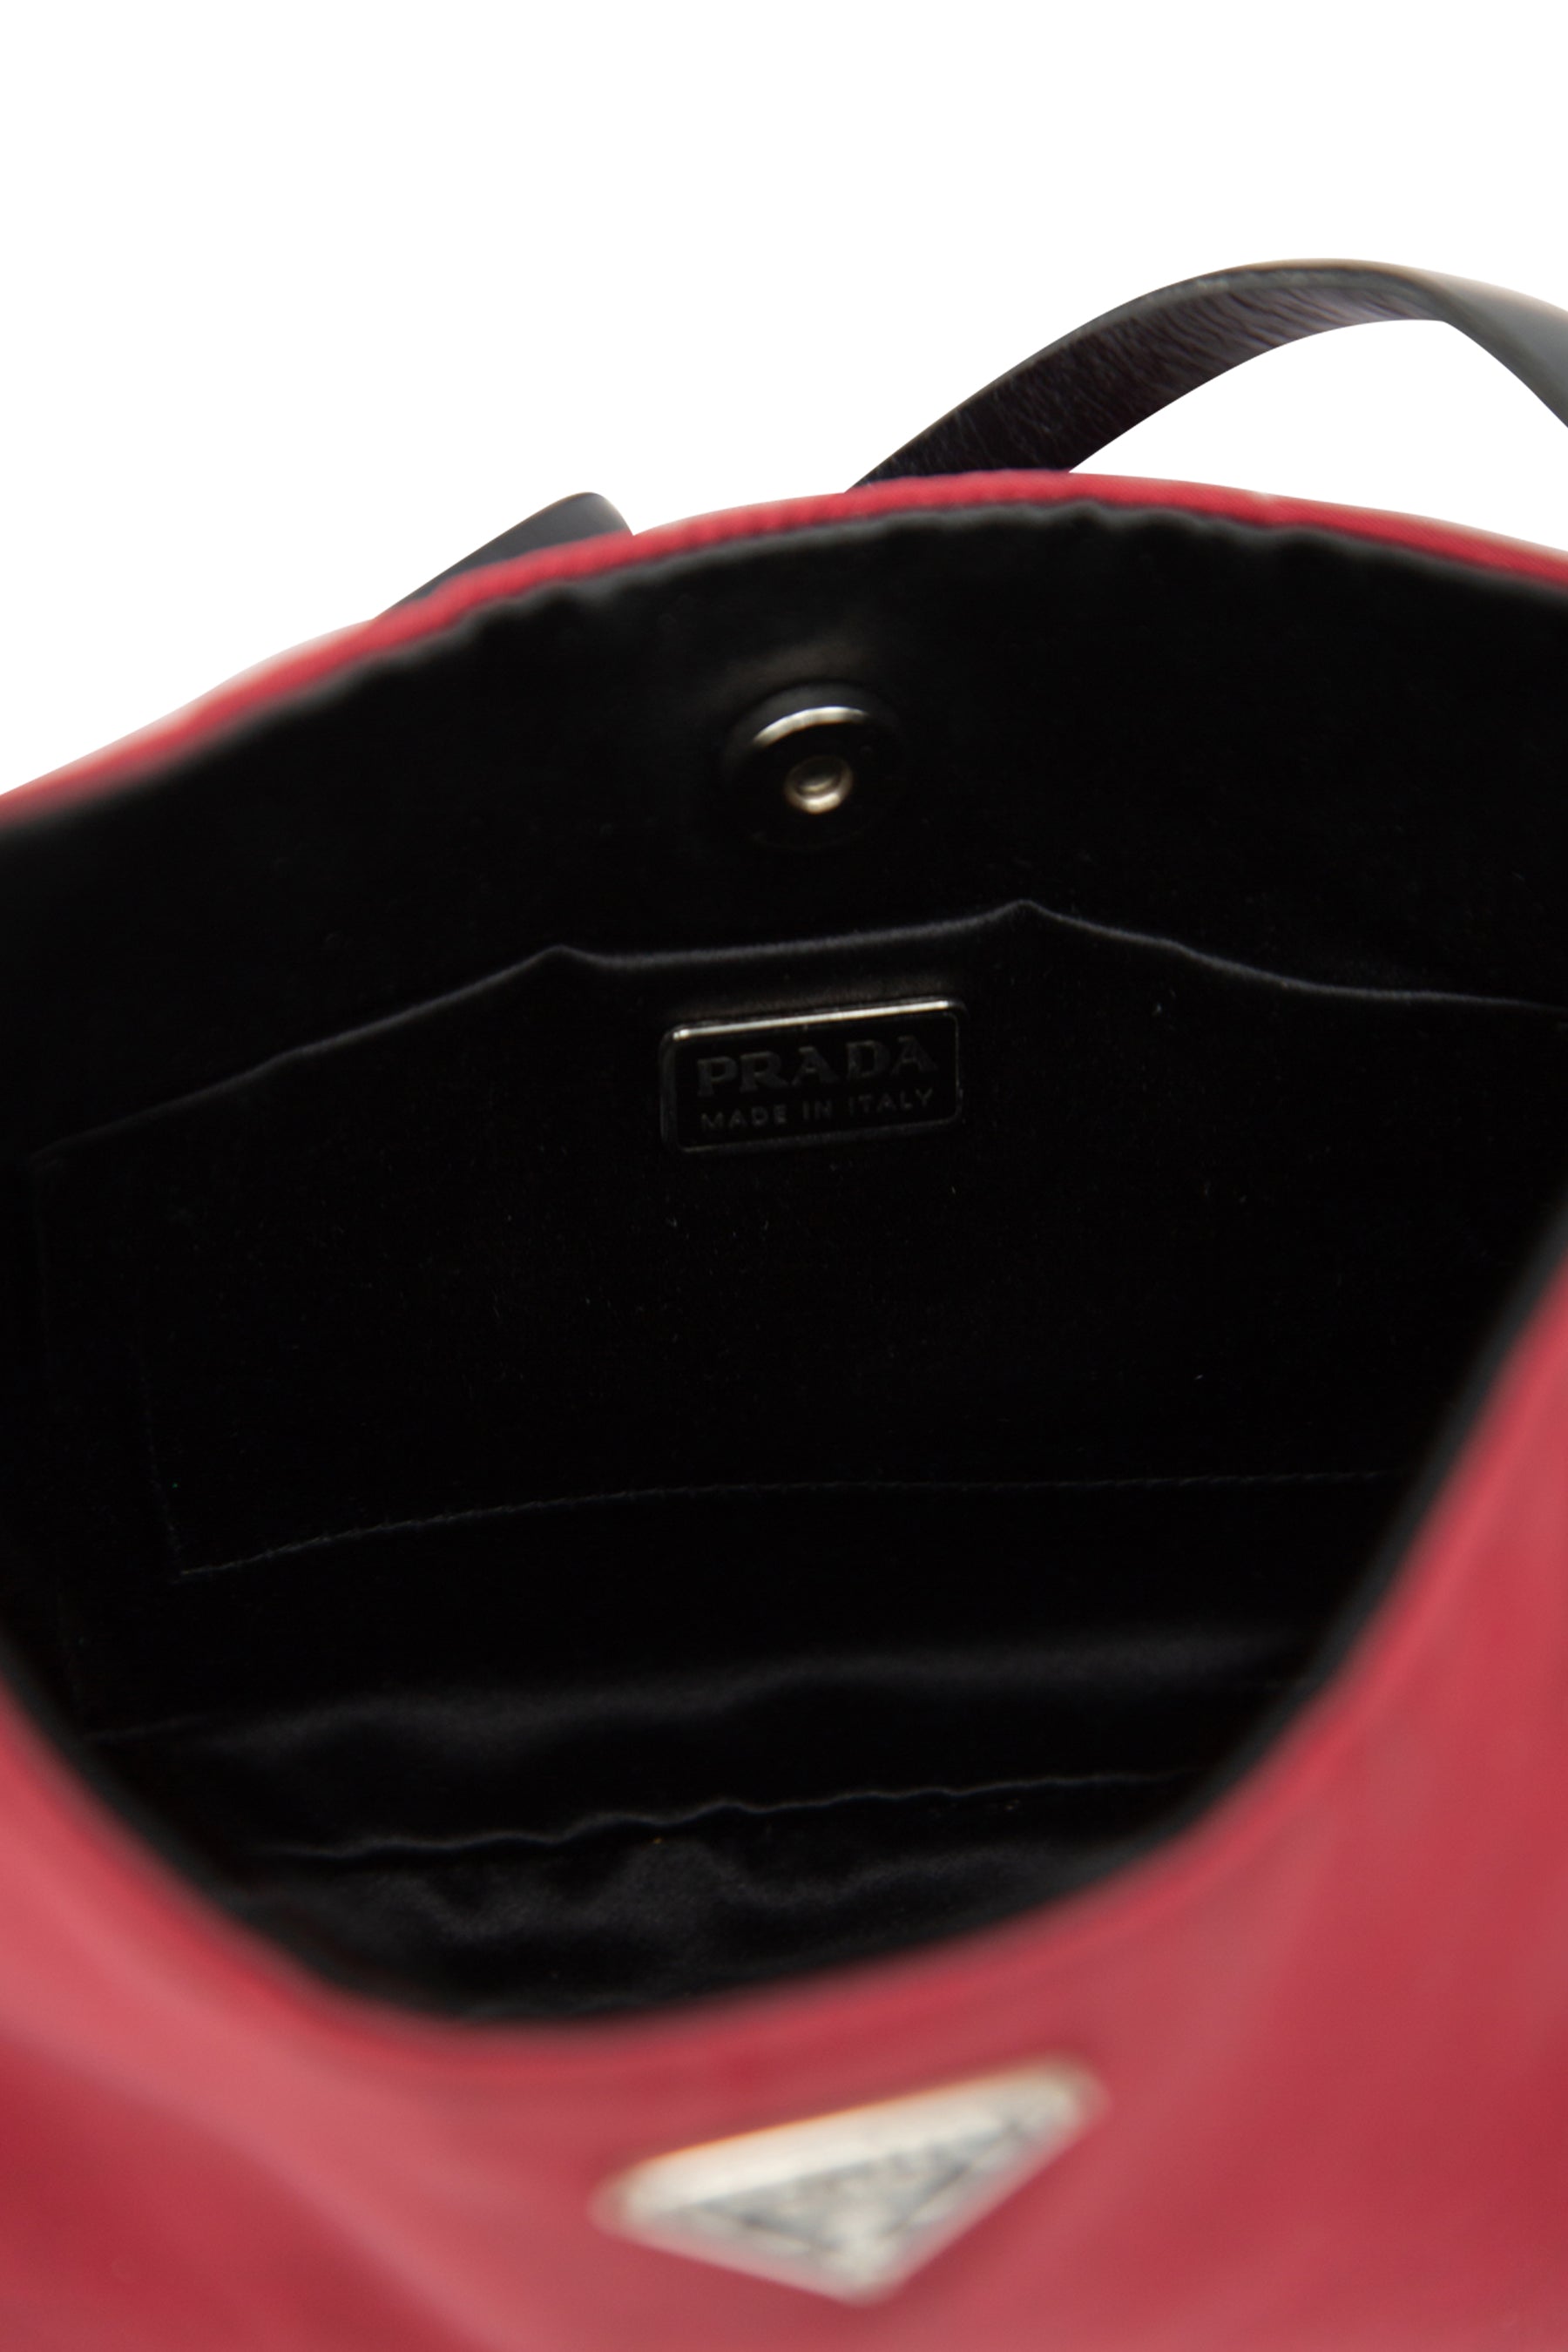 Prada Red Leather Handbag (Pre-Owned)